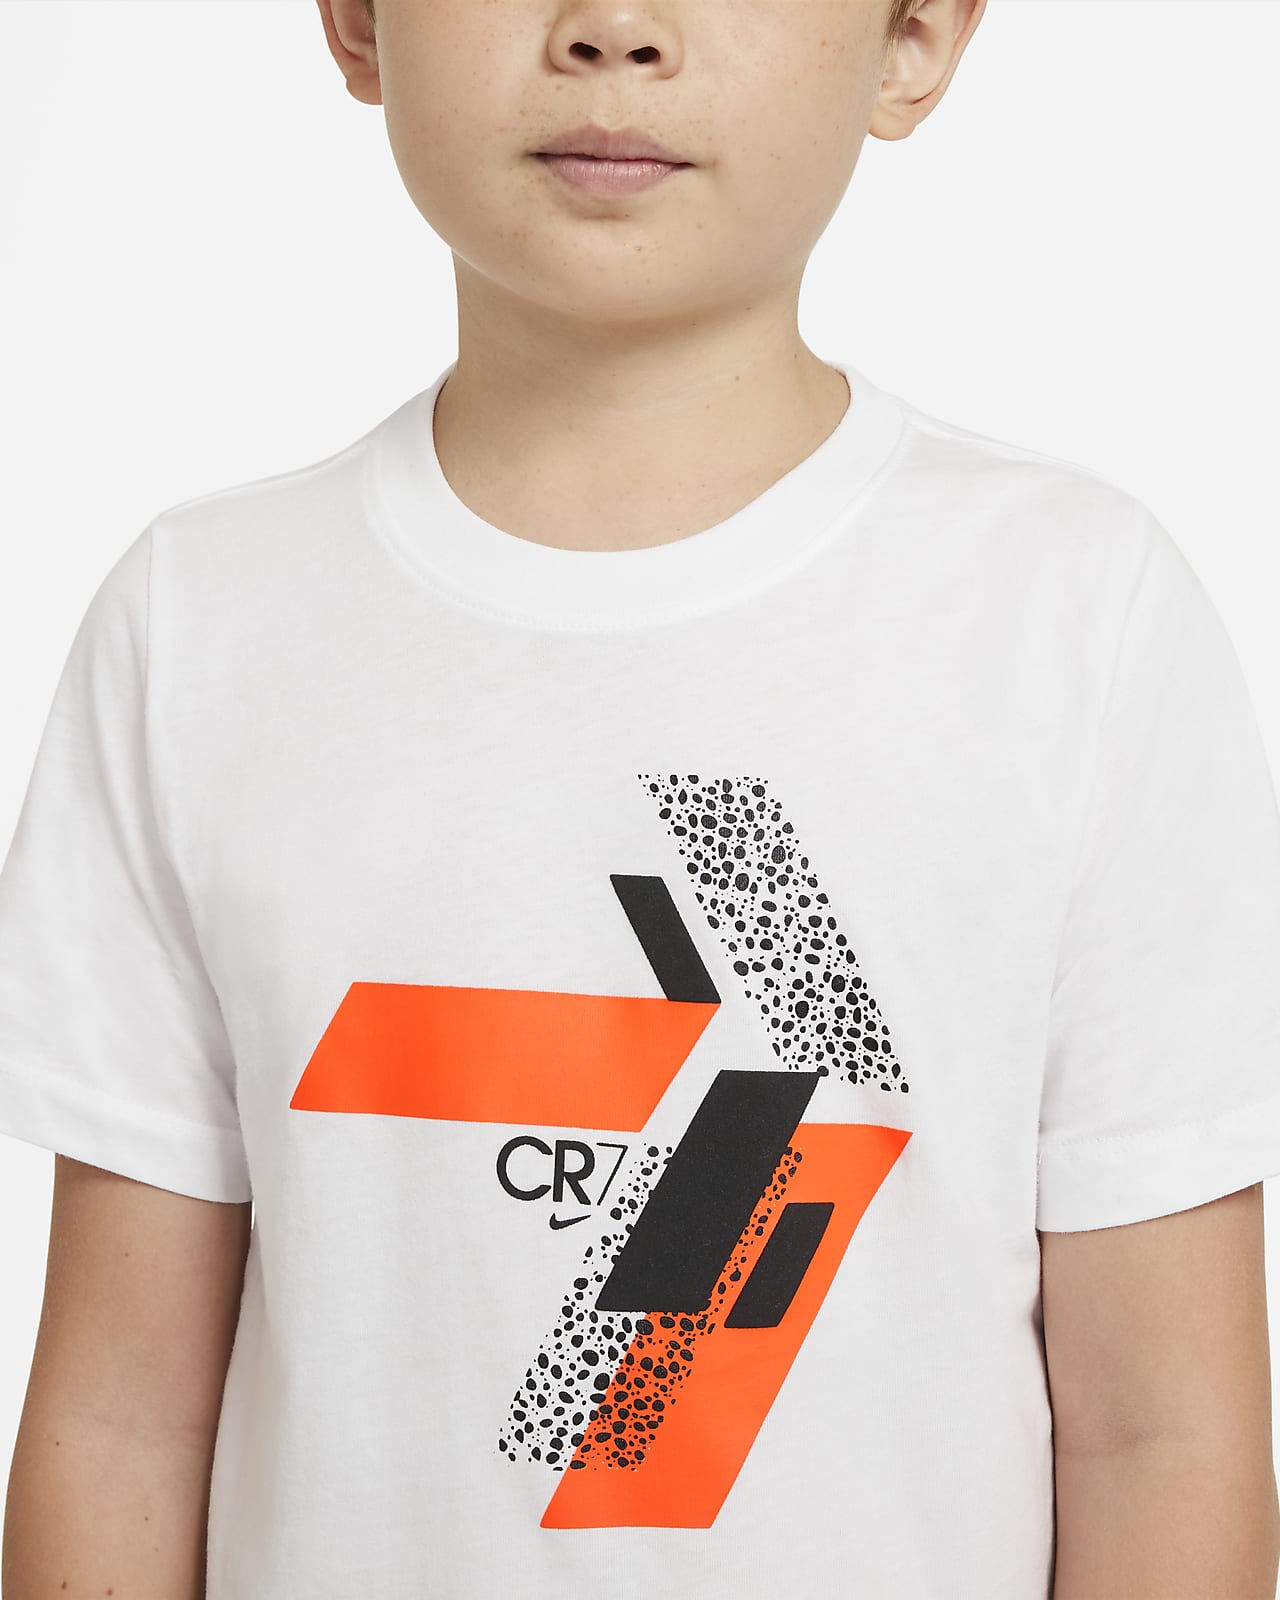 cr7 shirts india